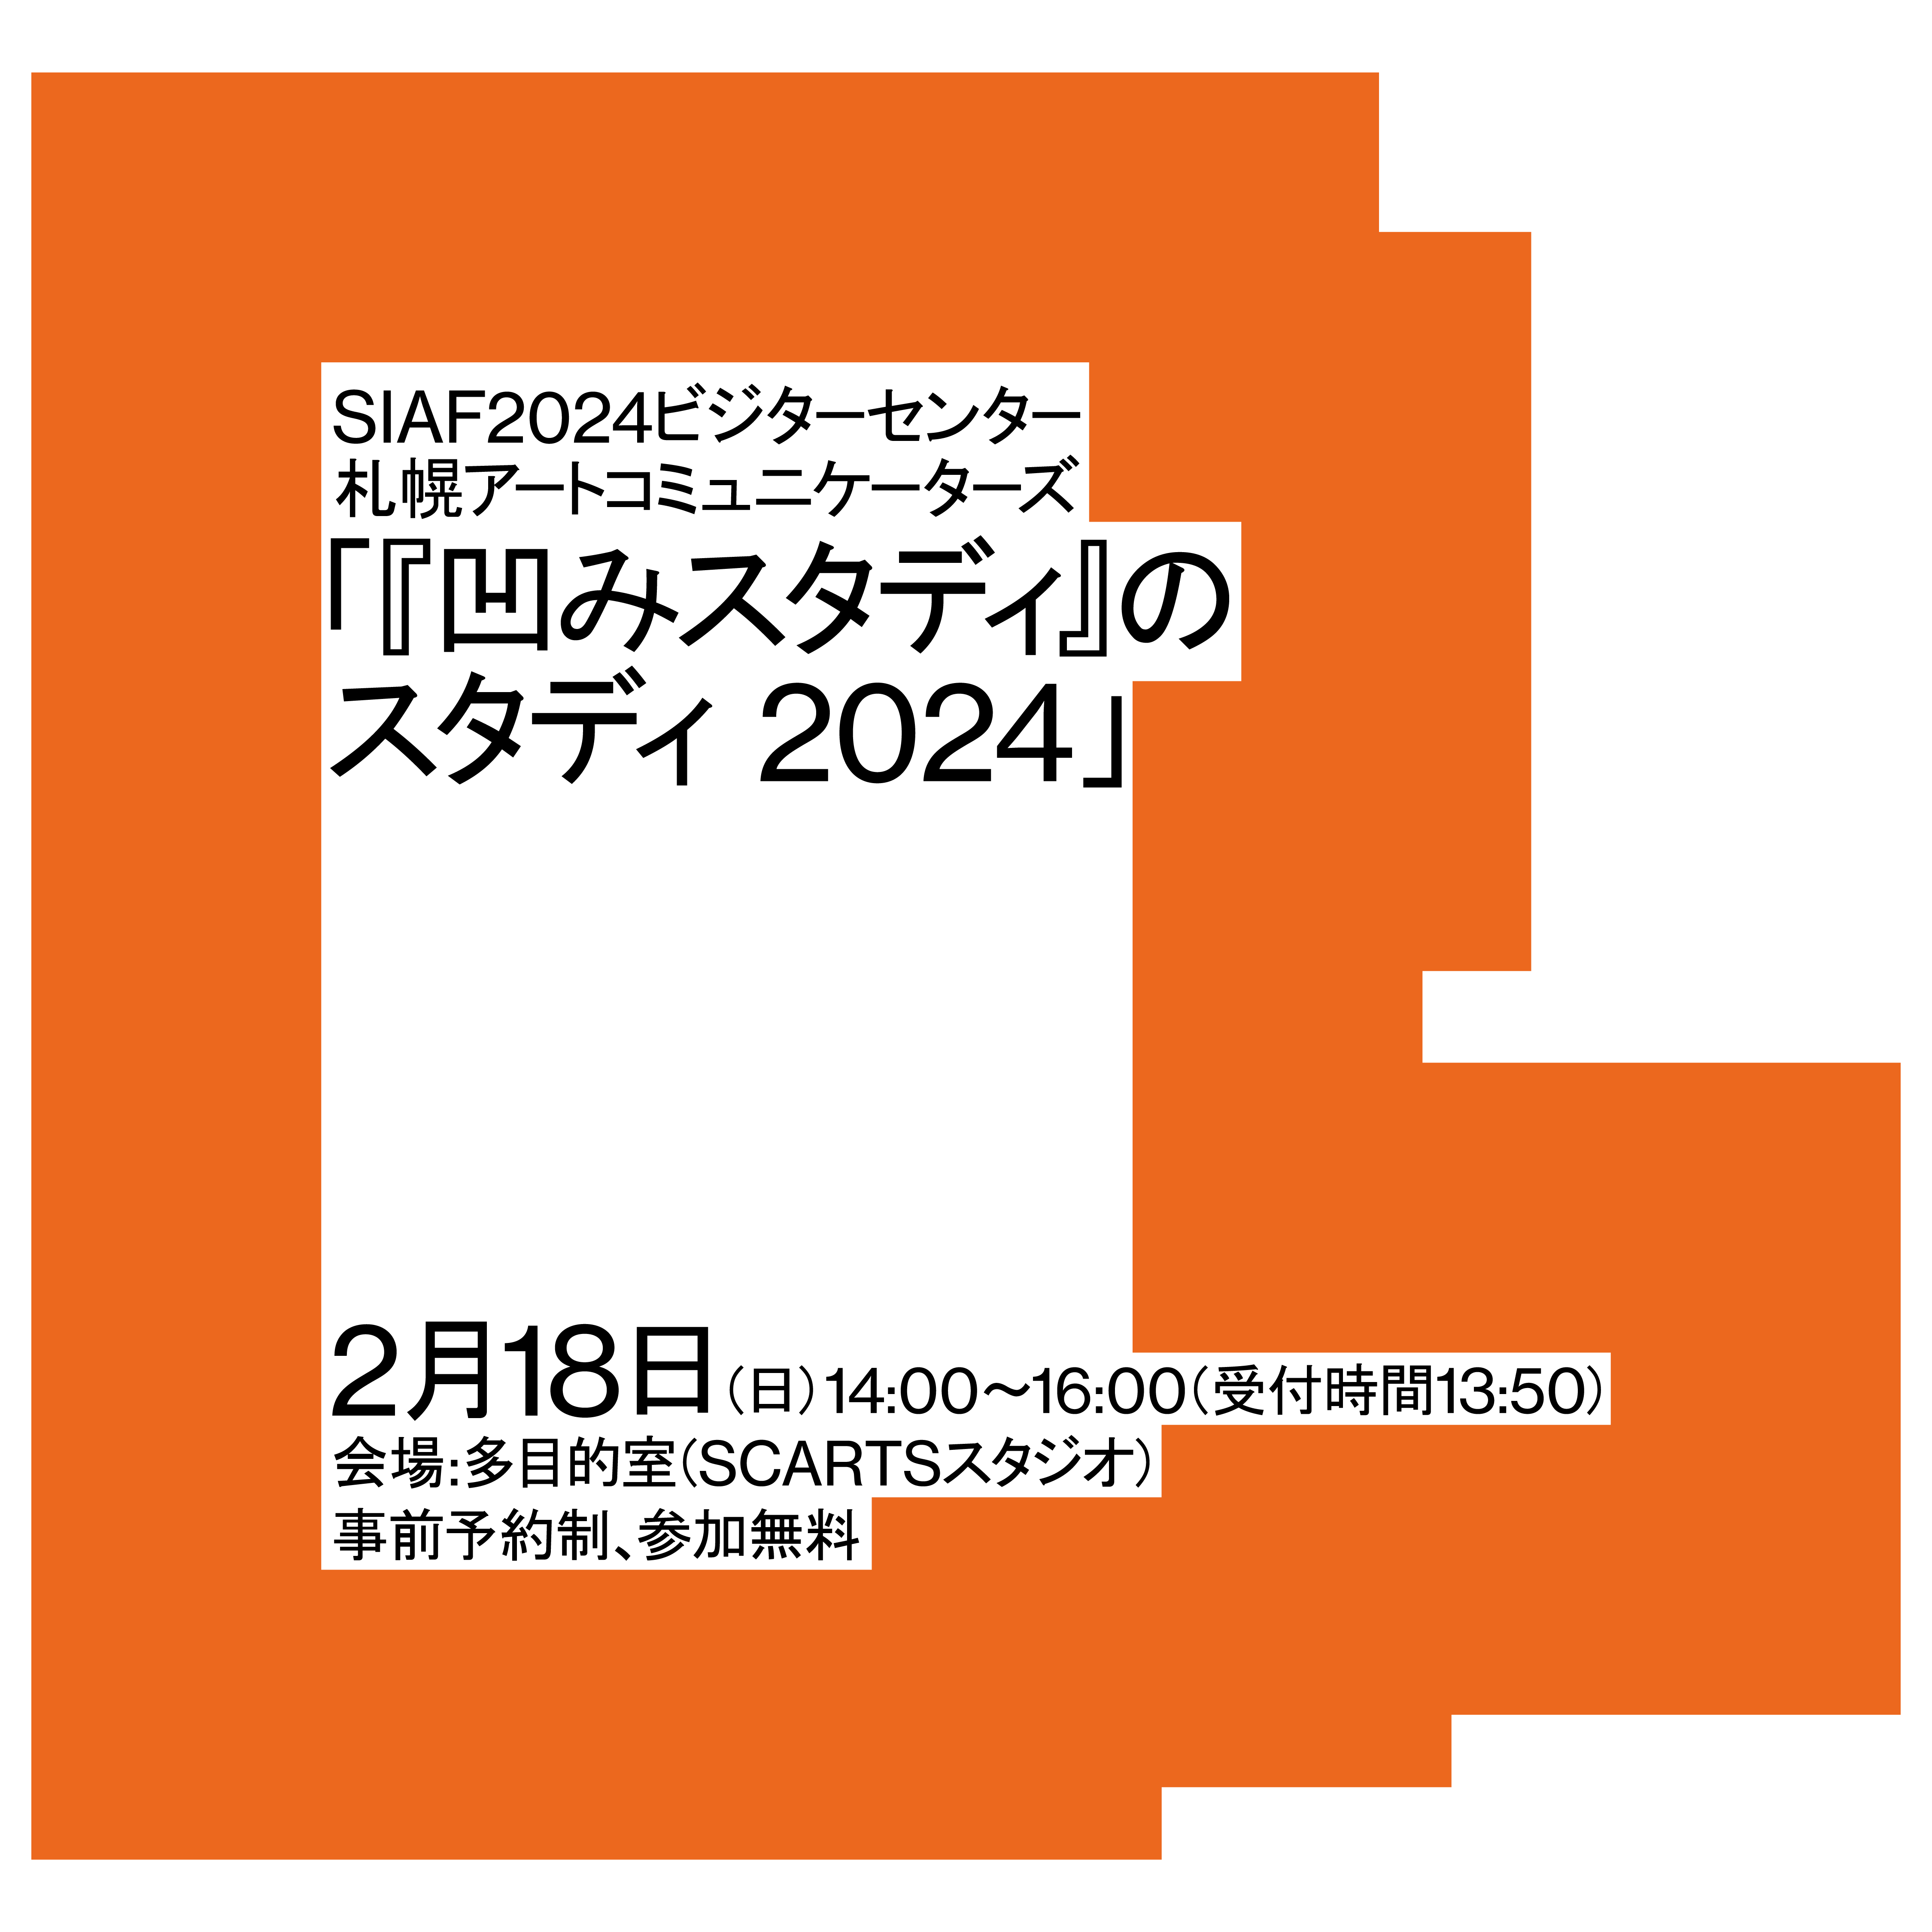 SIAF2024ビジターセンター 札幌アートコミュニケーターズ『凹みスタディ』のスタディ2024イメージ5枚目